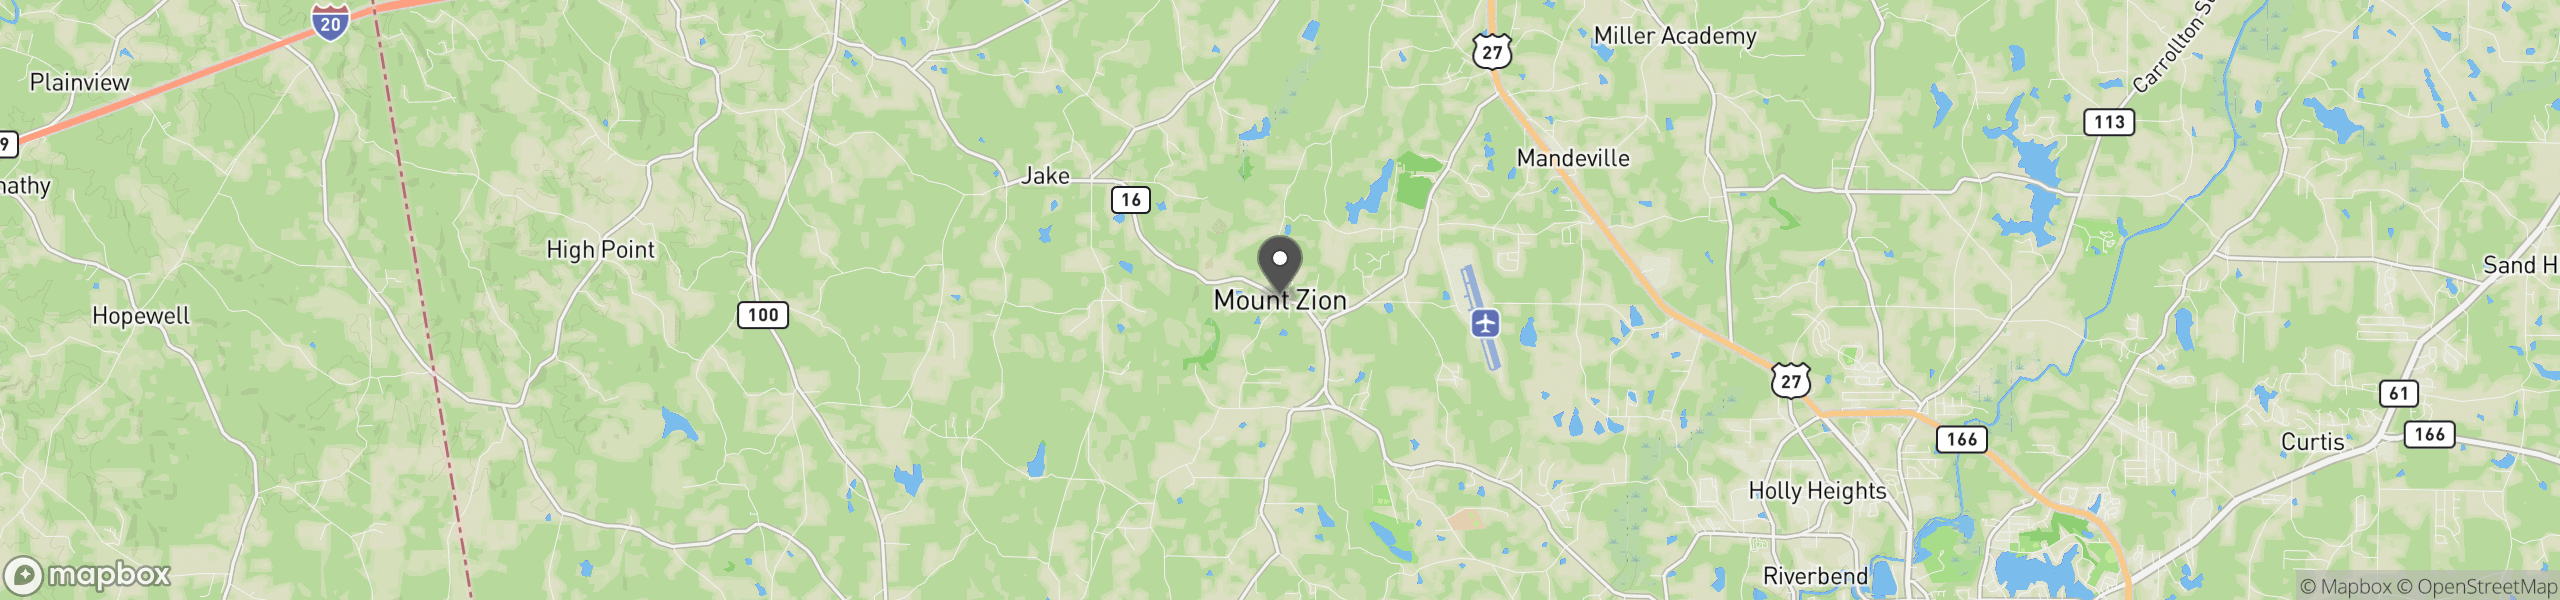 Mount Zion, GA